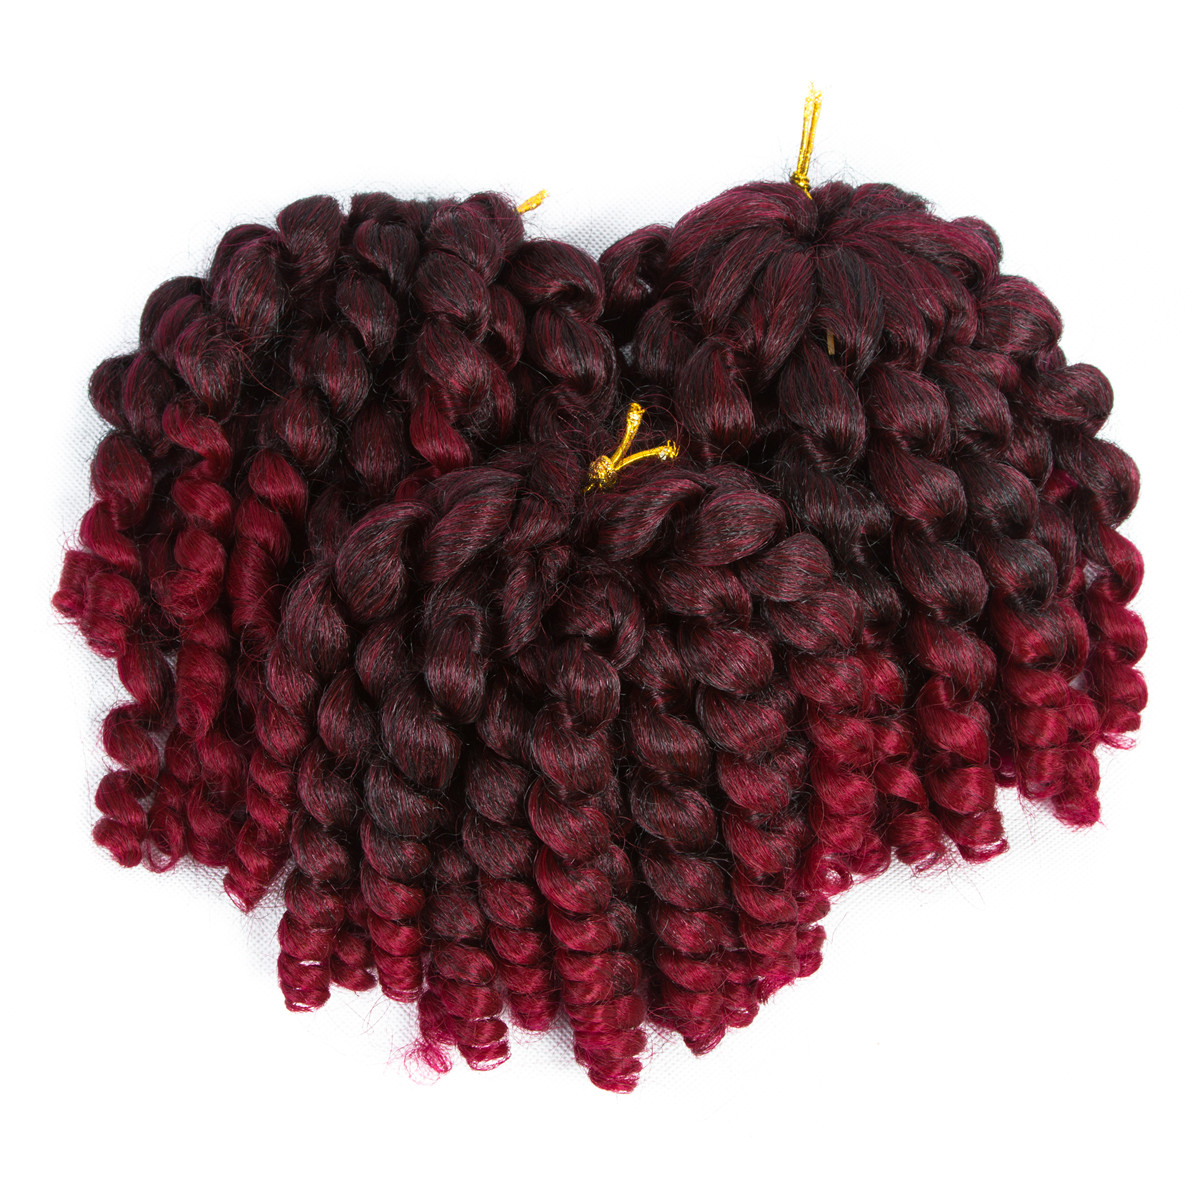 Curl Crochet Twist Jamaican Bounce Synthetic Kanekalon Braiding Hair